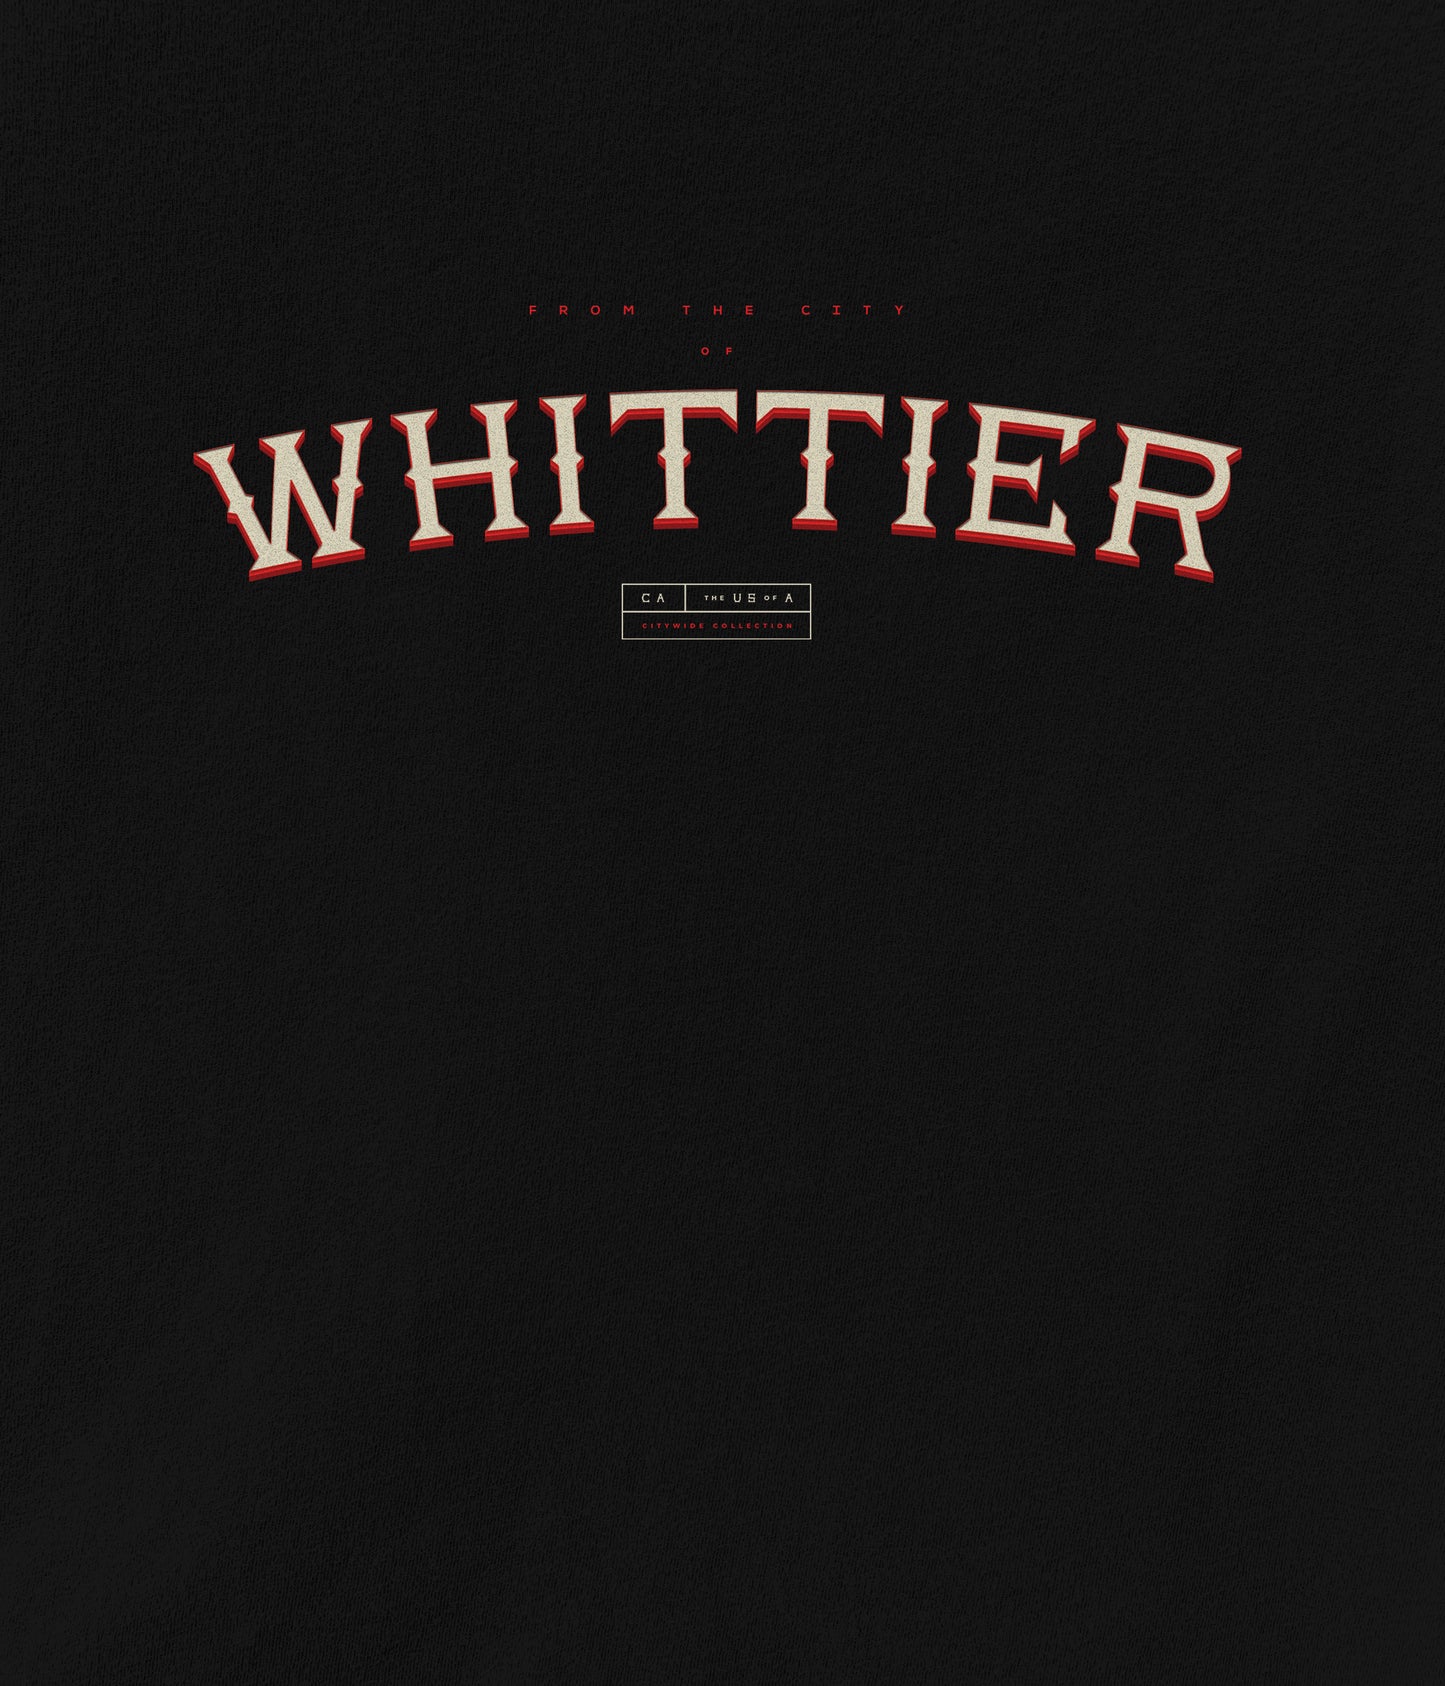 Whittier Stacked Crewneck Sweatshirt